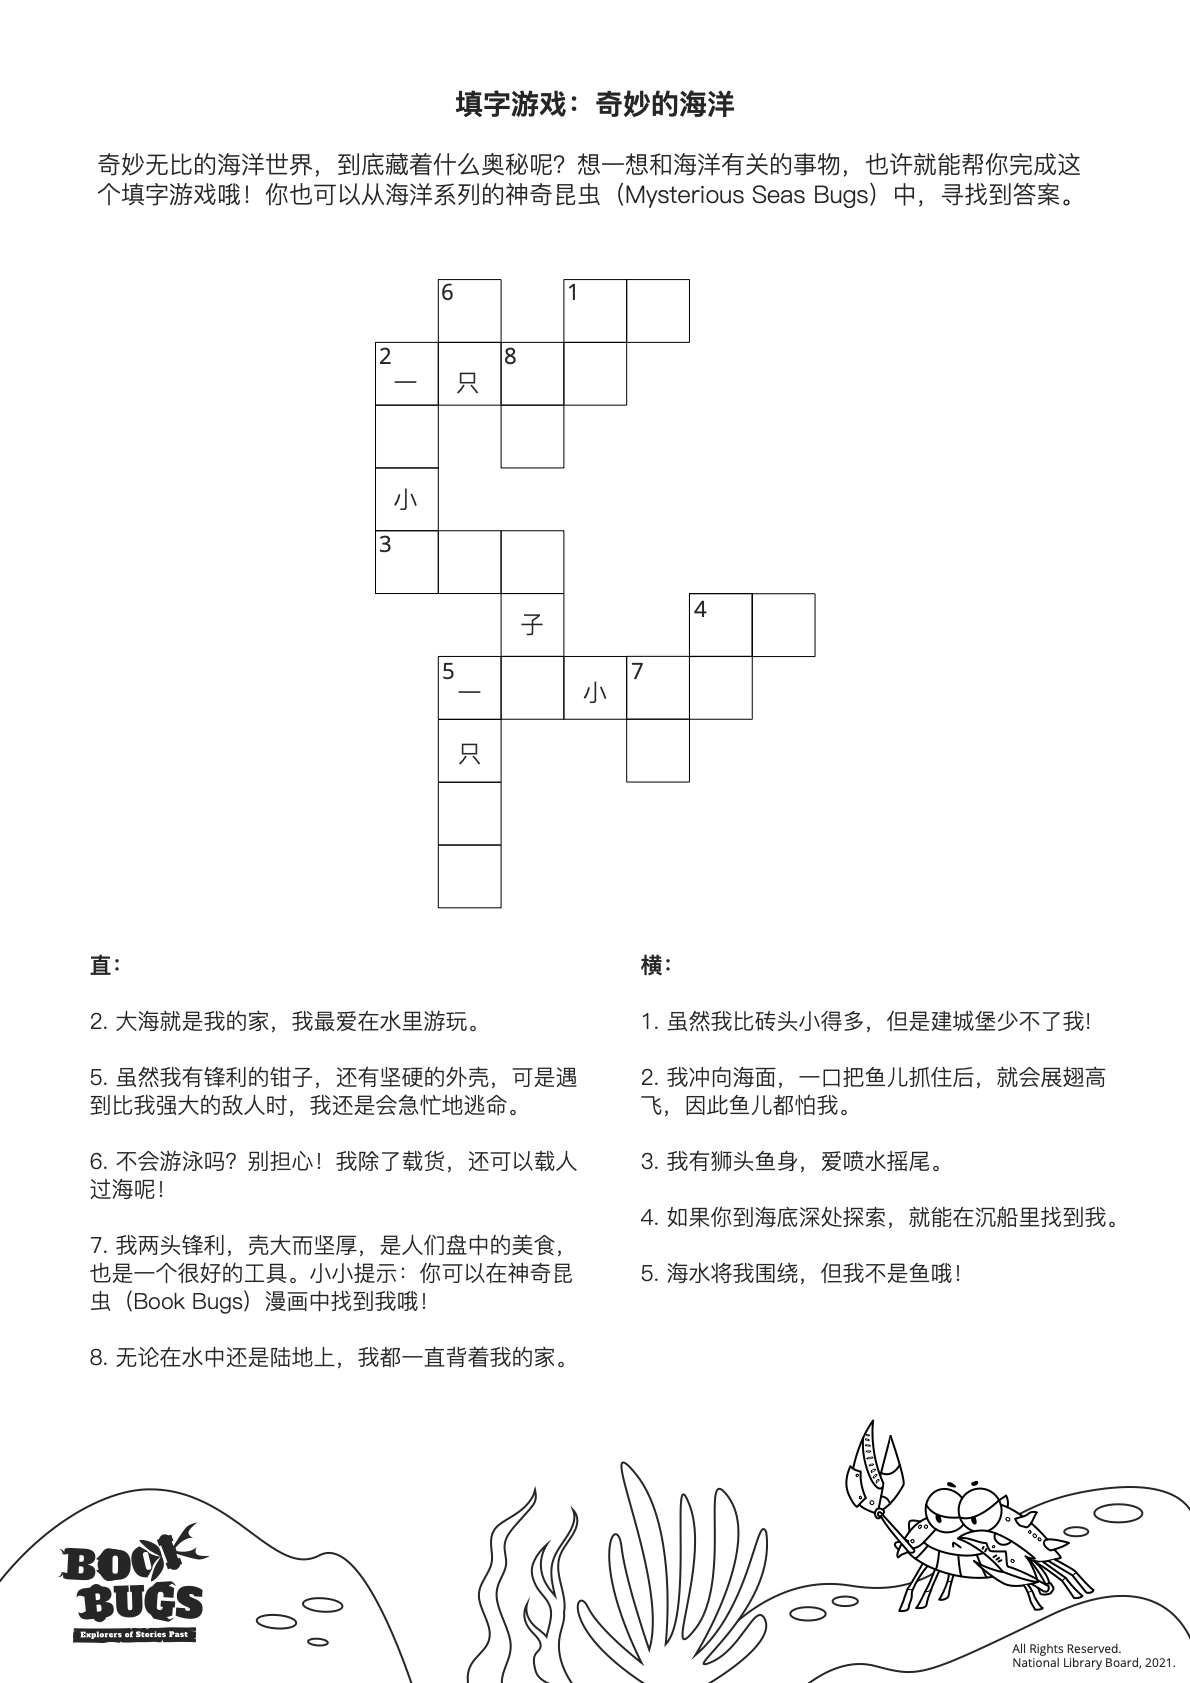 Chinese-English Crossword